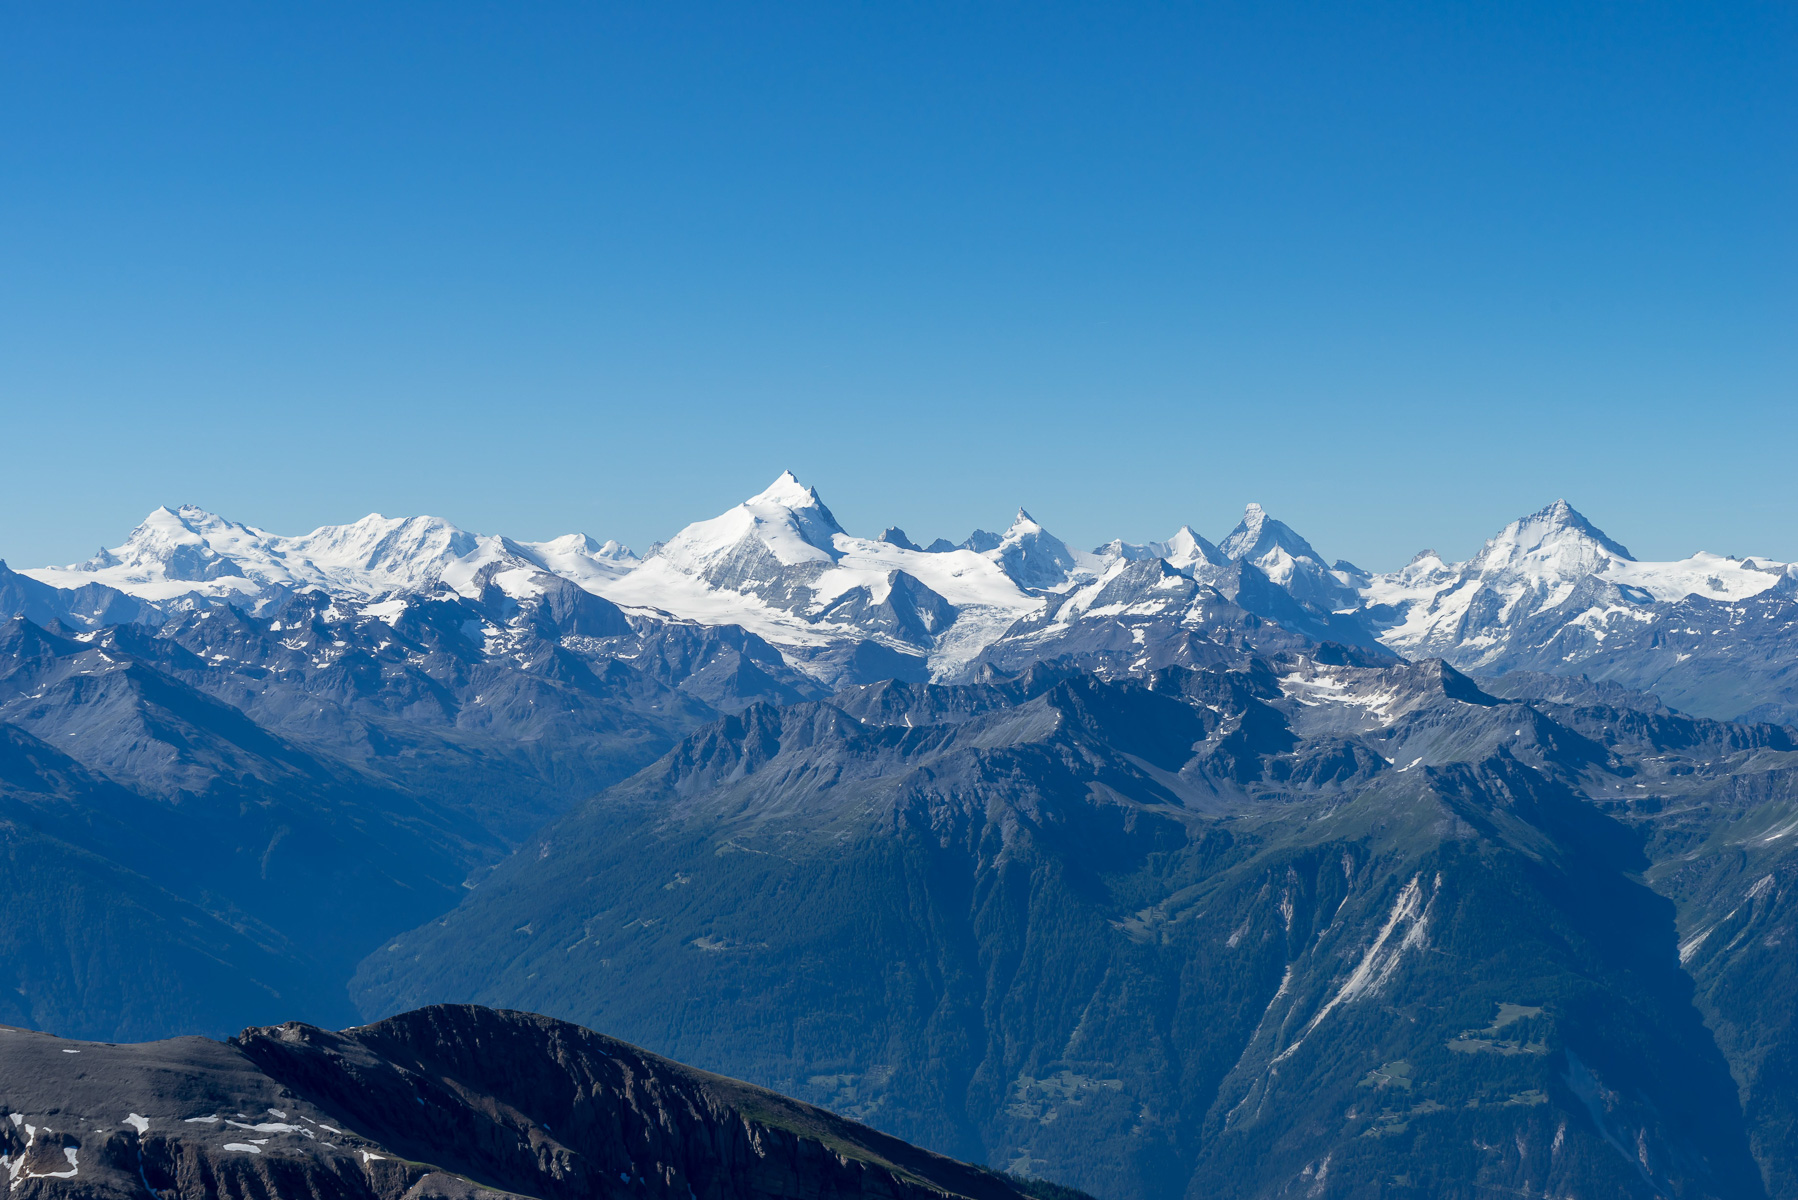 Walliser Detailansicht - Monte Rosa, Breithorn, Weisshorn, Zinalrothorn, Matterhorn, Dent Blanche.